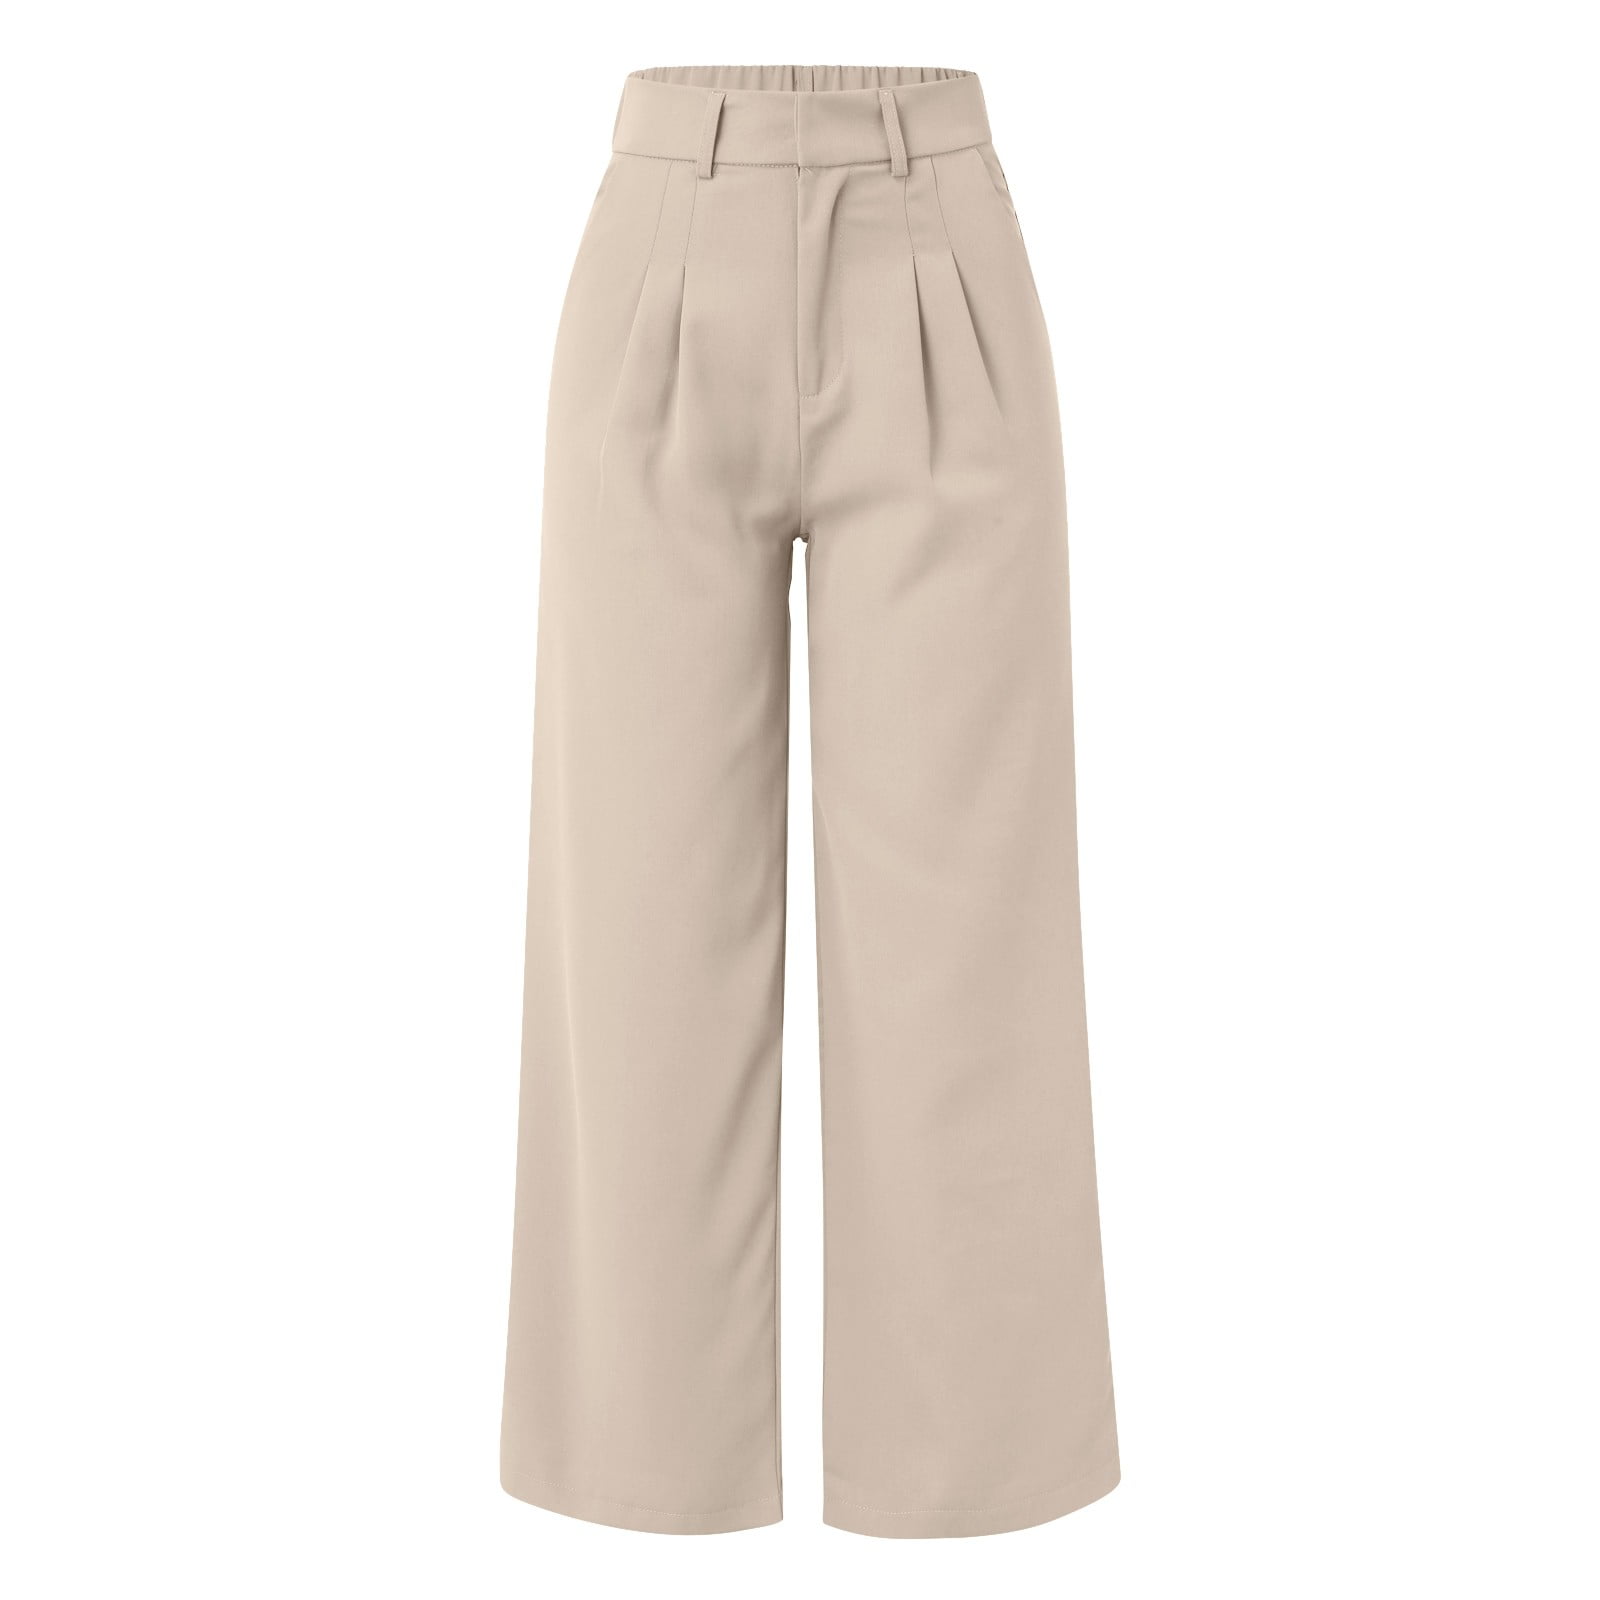 MANCREW Formal Pants for Men - Beige Combo - Price History